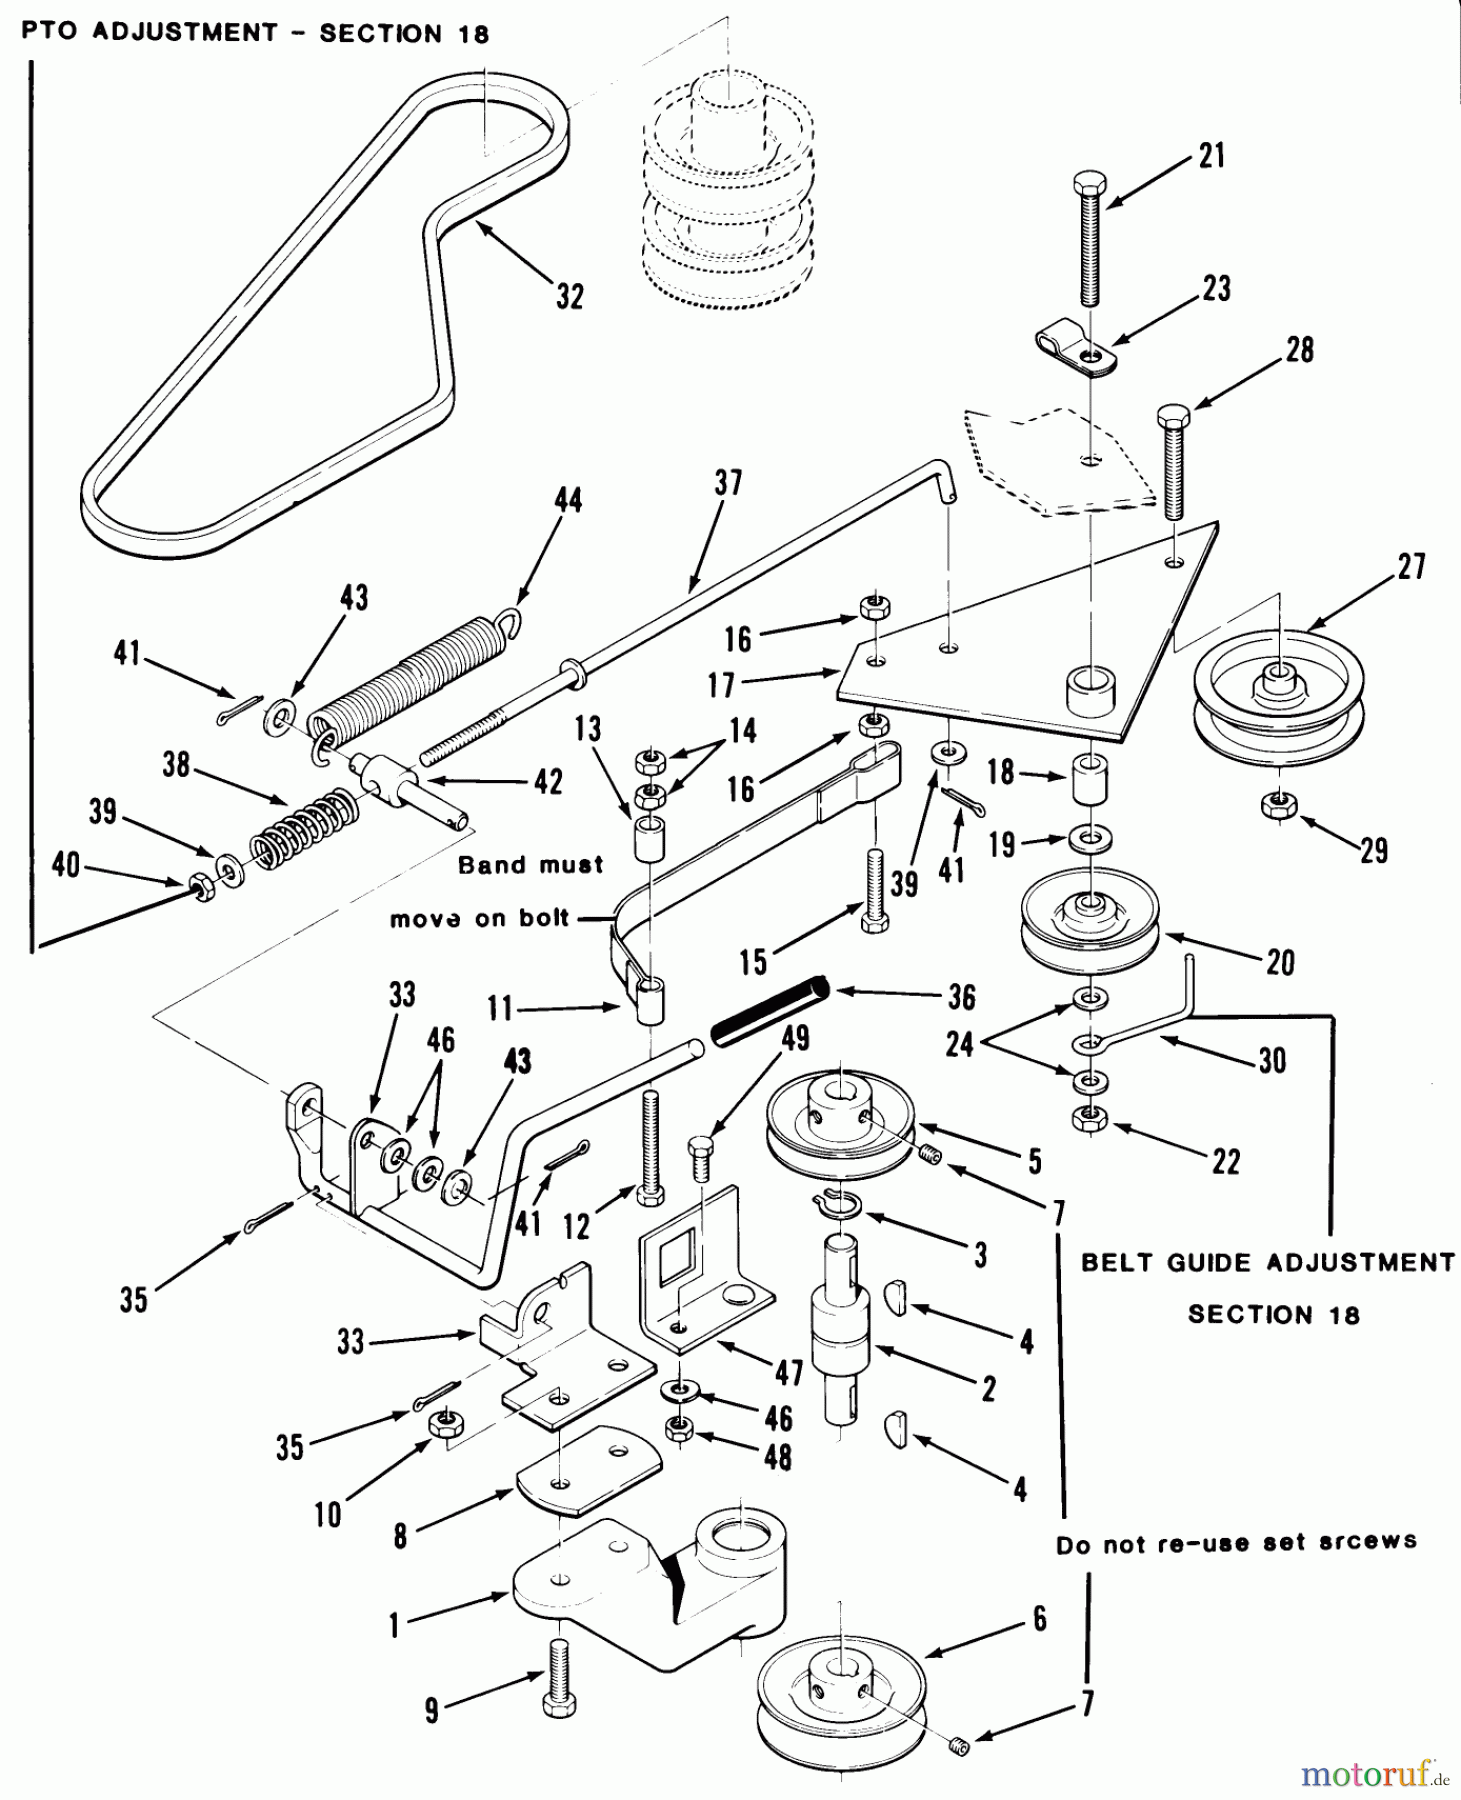  Toro Neu Mowers, Rear-Engine Rider 33-08B501 (108-5) - Toro 108-5 Rear Engine Rider, 1985 PTO CLUTCH, PULLEYS, AND CONTROLS